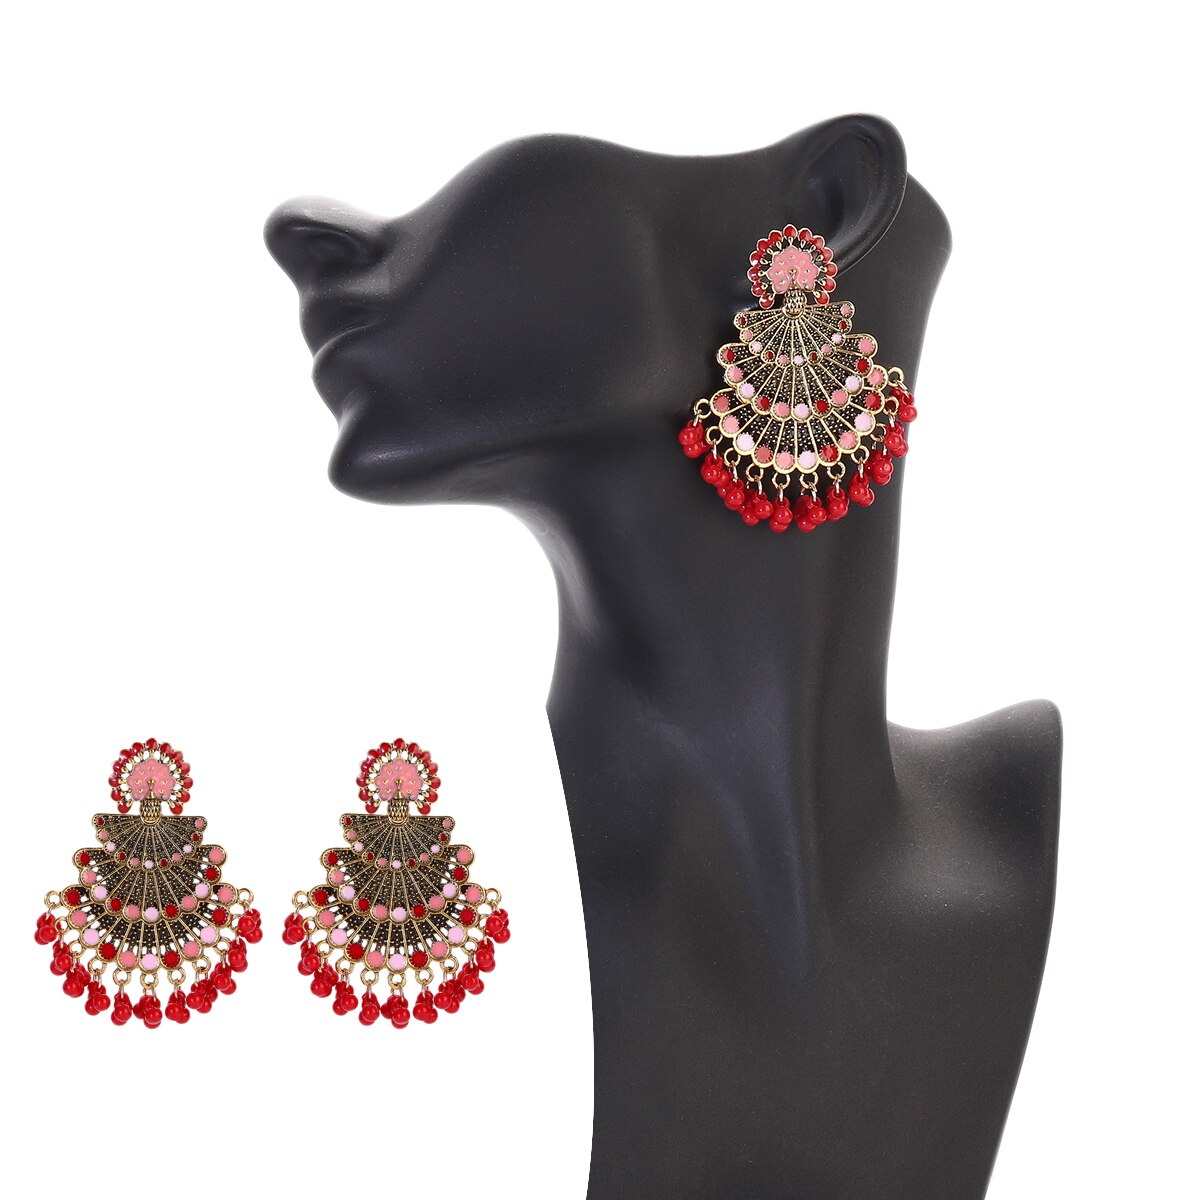 Indian-Jewellery-Red-White-Sector-Jhumka-Earrings-For-Women-Orecchini-Retro-Pearl-Beads-Tassel-Earri-1005004587102350-8